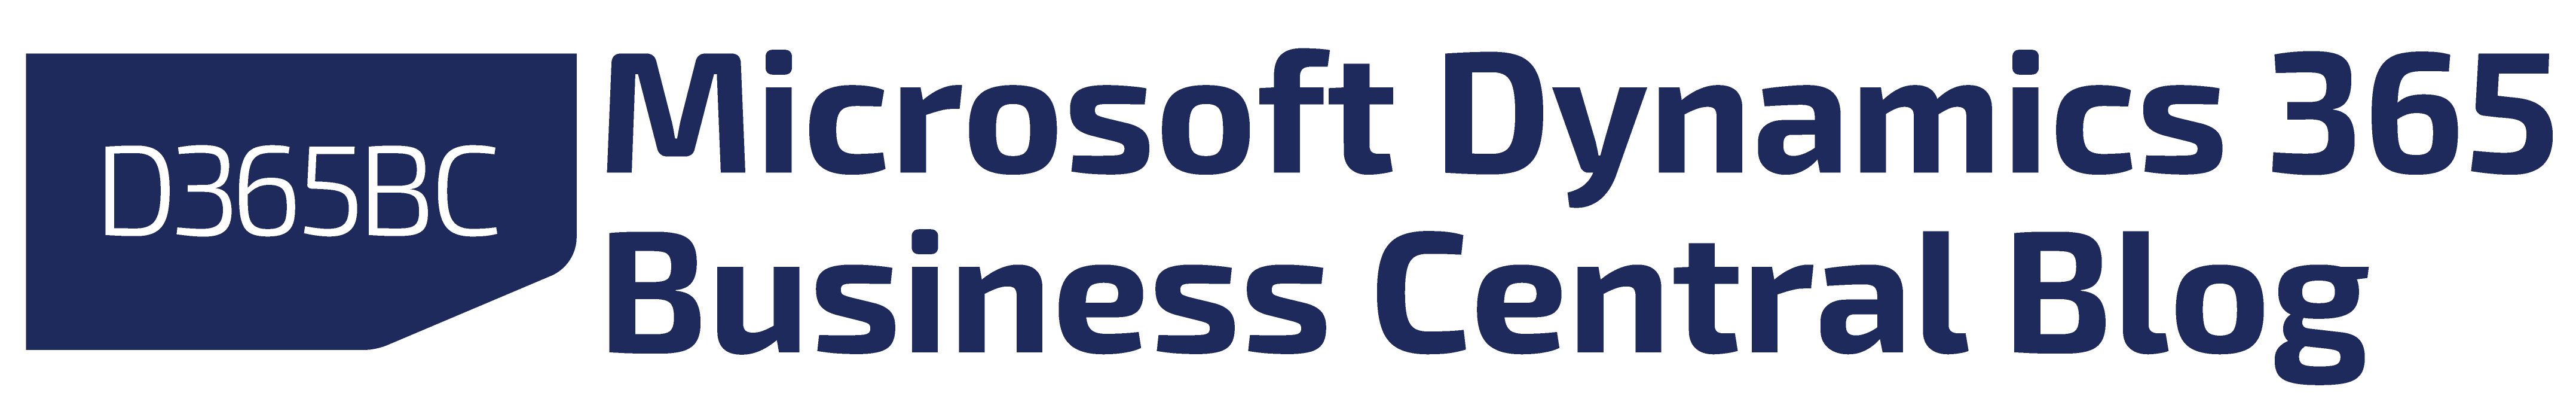 Microsoft Dynamics 365 Business Central Blog